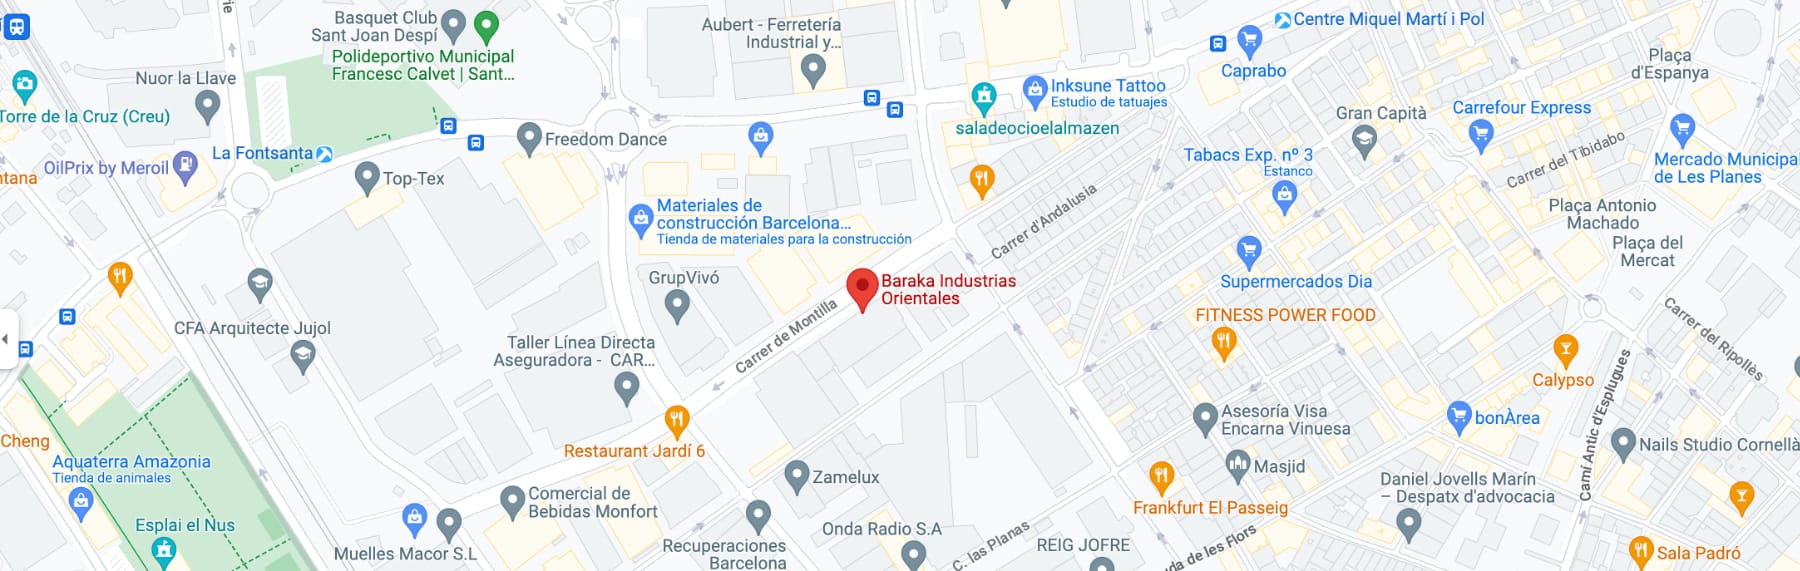 libanofoods google maps barcelona